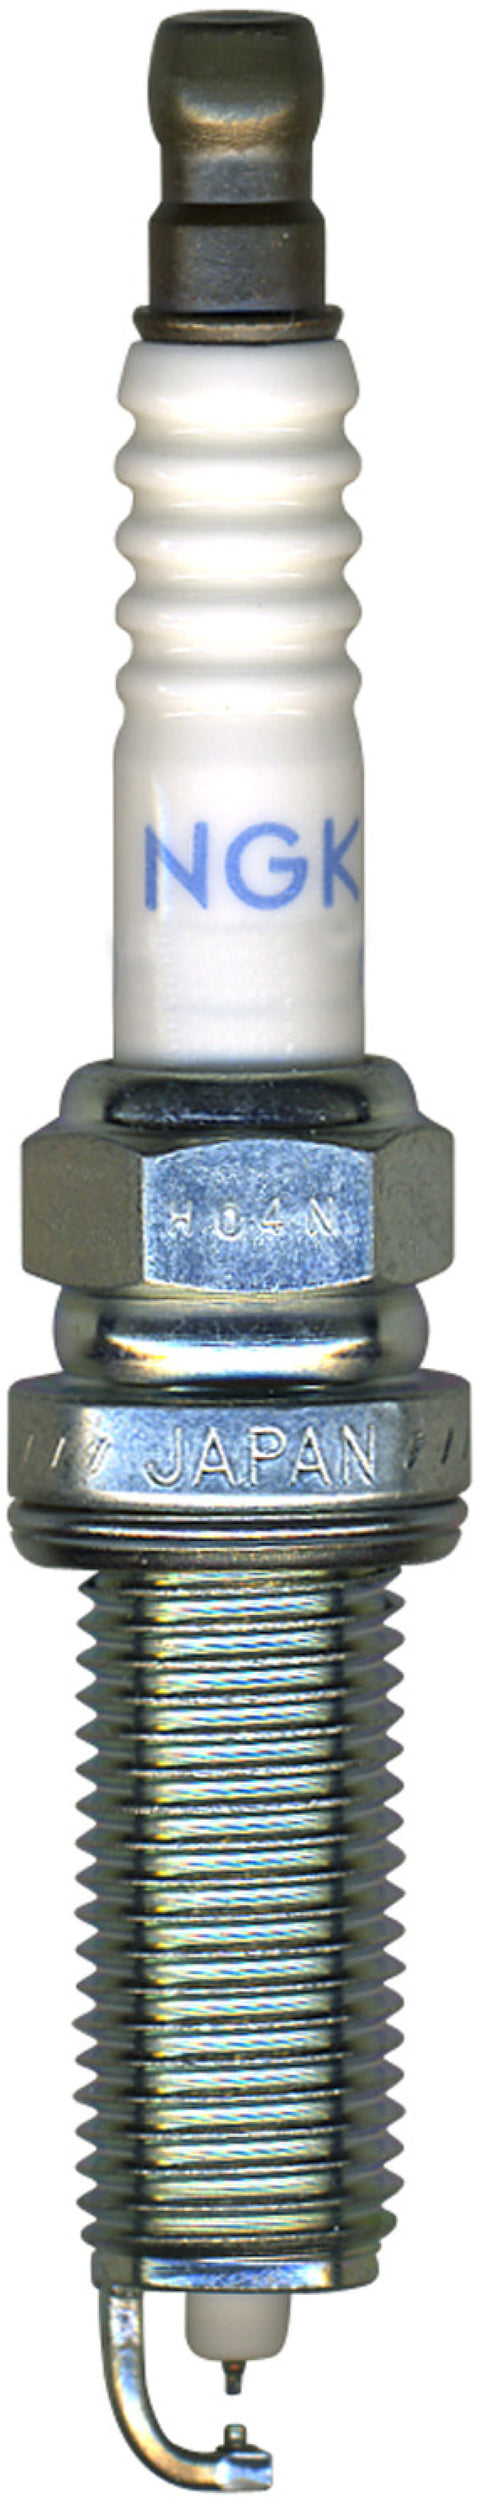 NGK Iridium Spark Plug Box of 4 (DILKAR7B11) - Nissan/Infiniti